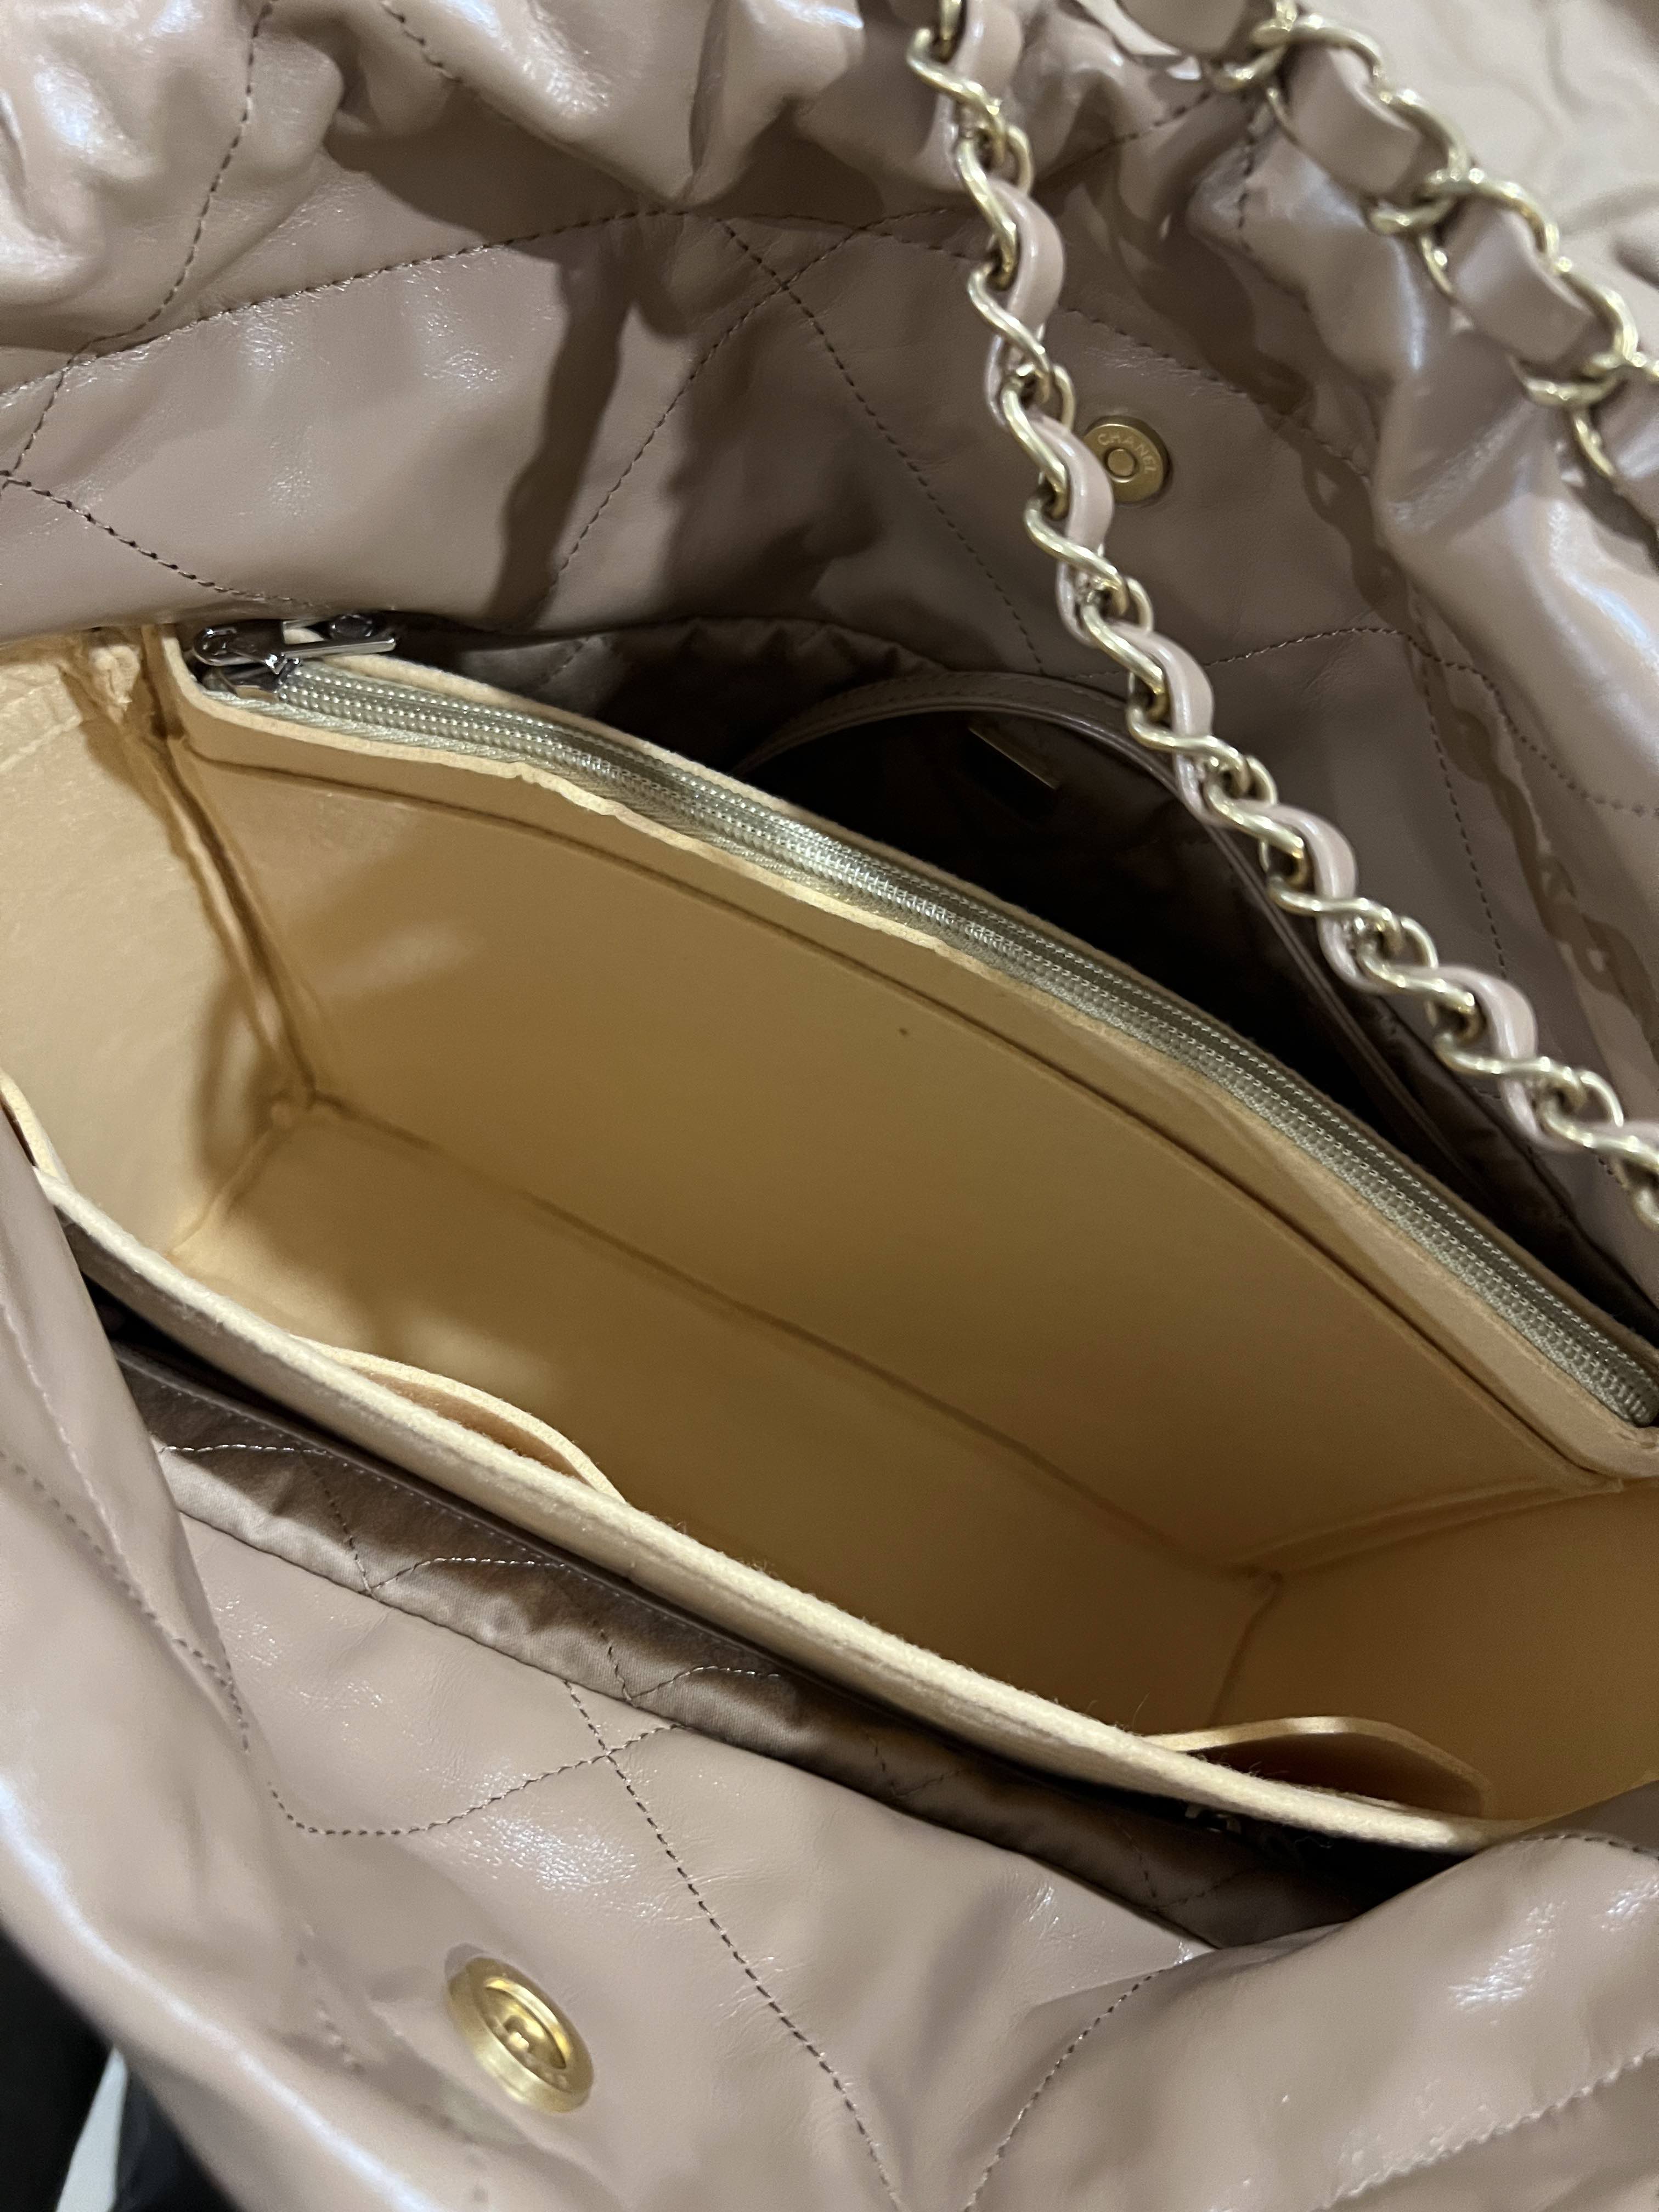 bag organiser insert for channel 22 handbag in bag multi pocket compartment  storage inner lining inside bag accessories organizer